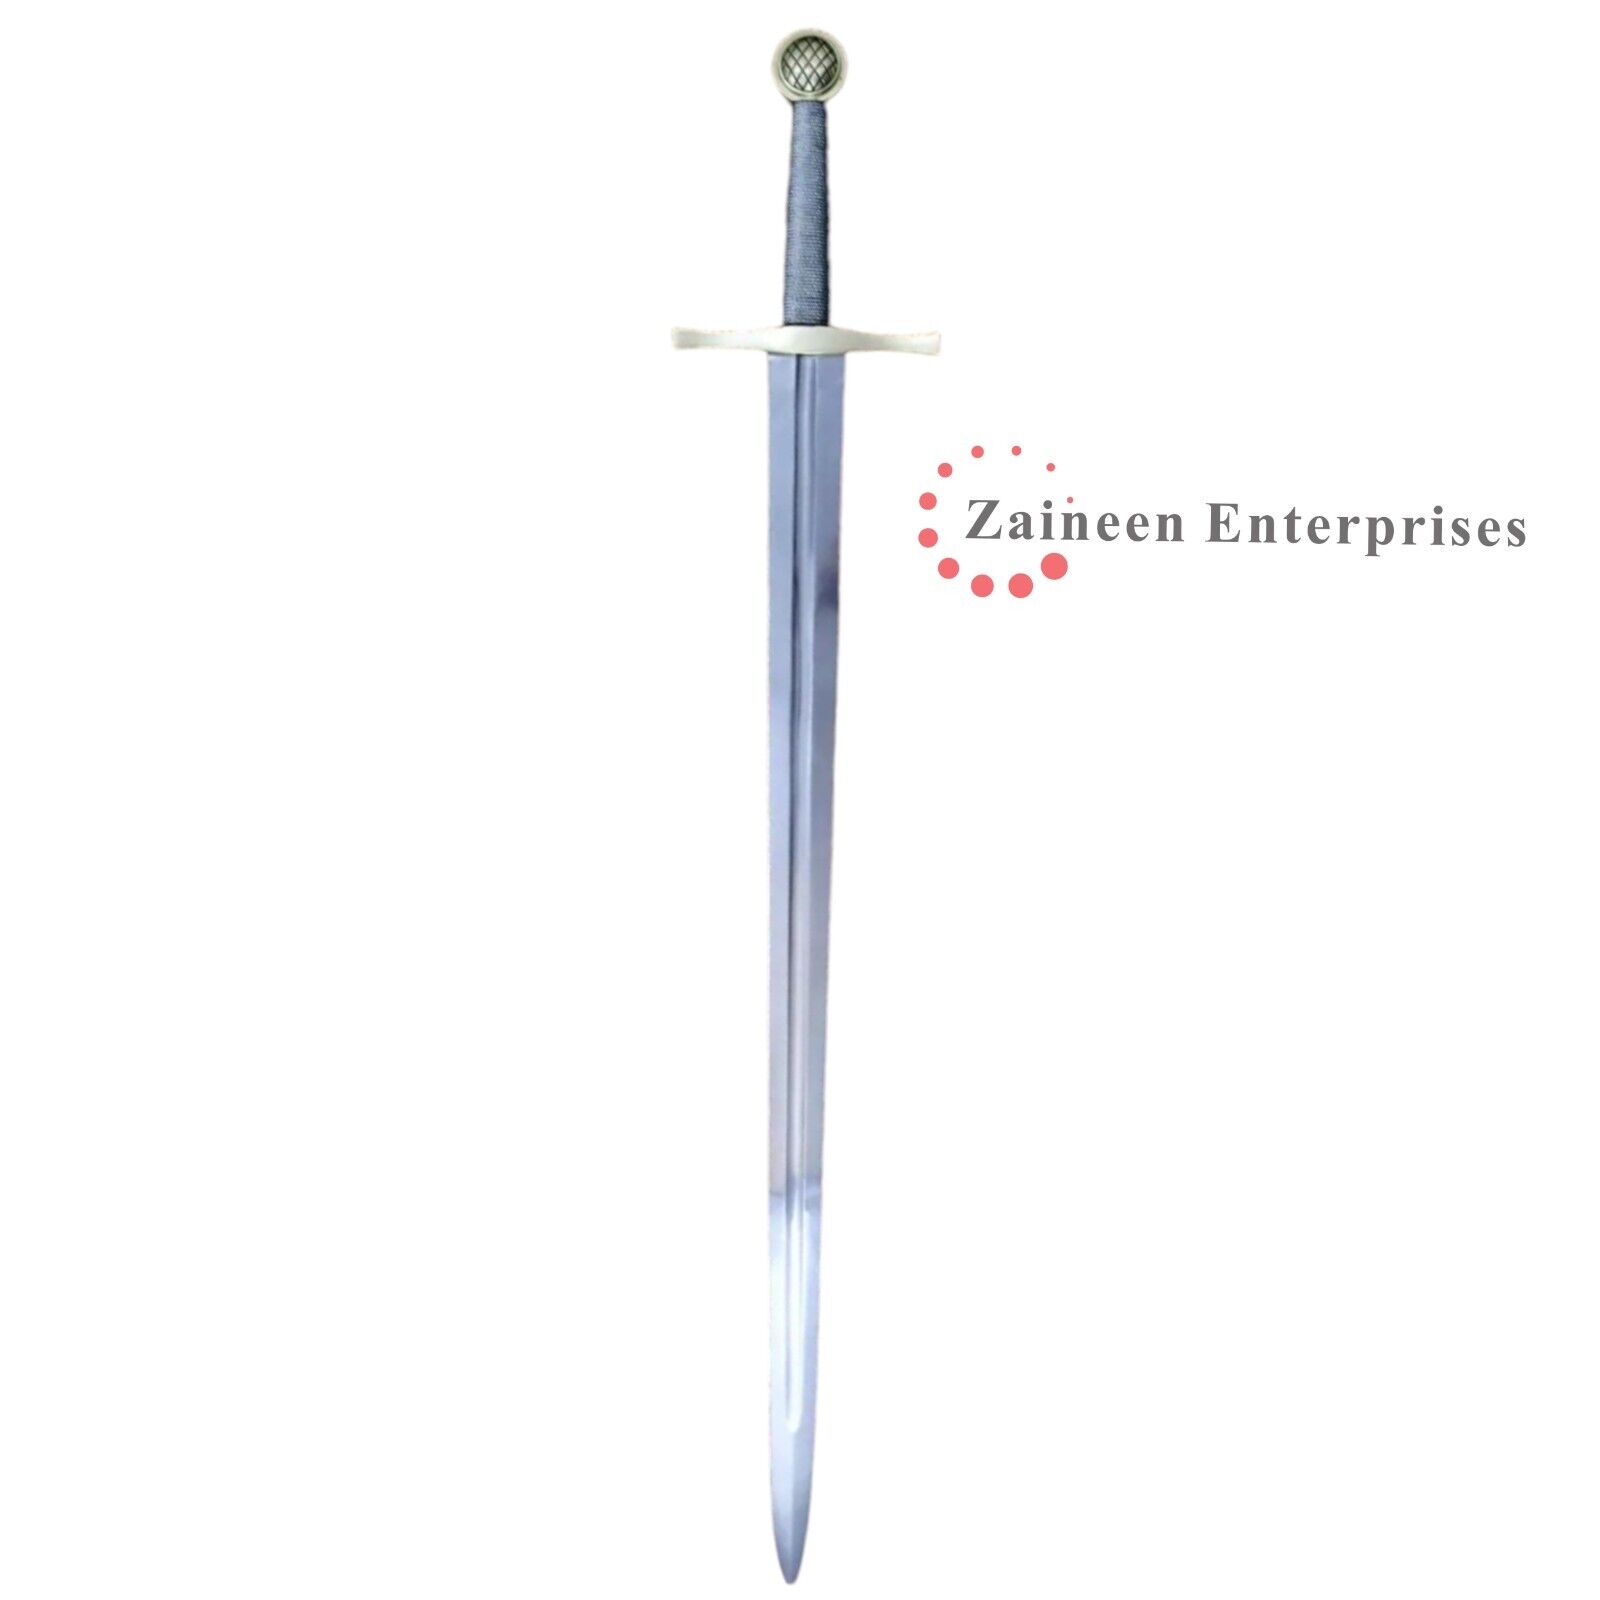 The King Arthur Excalibur Medieval Sword Replica